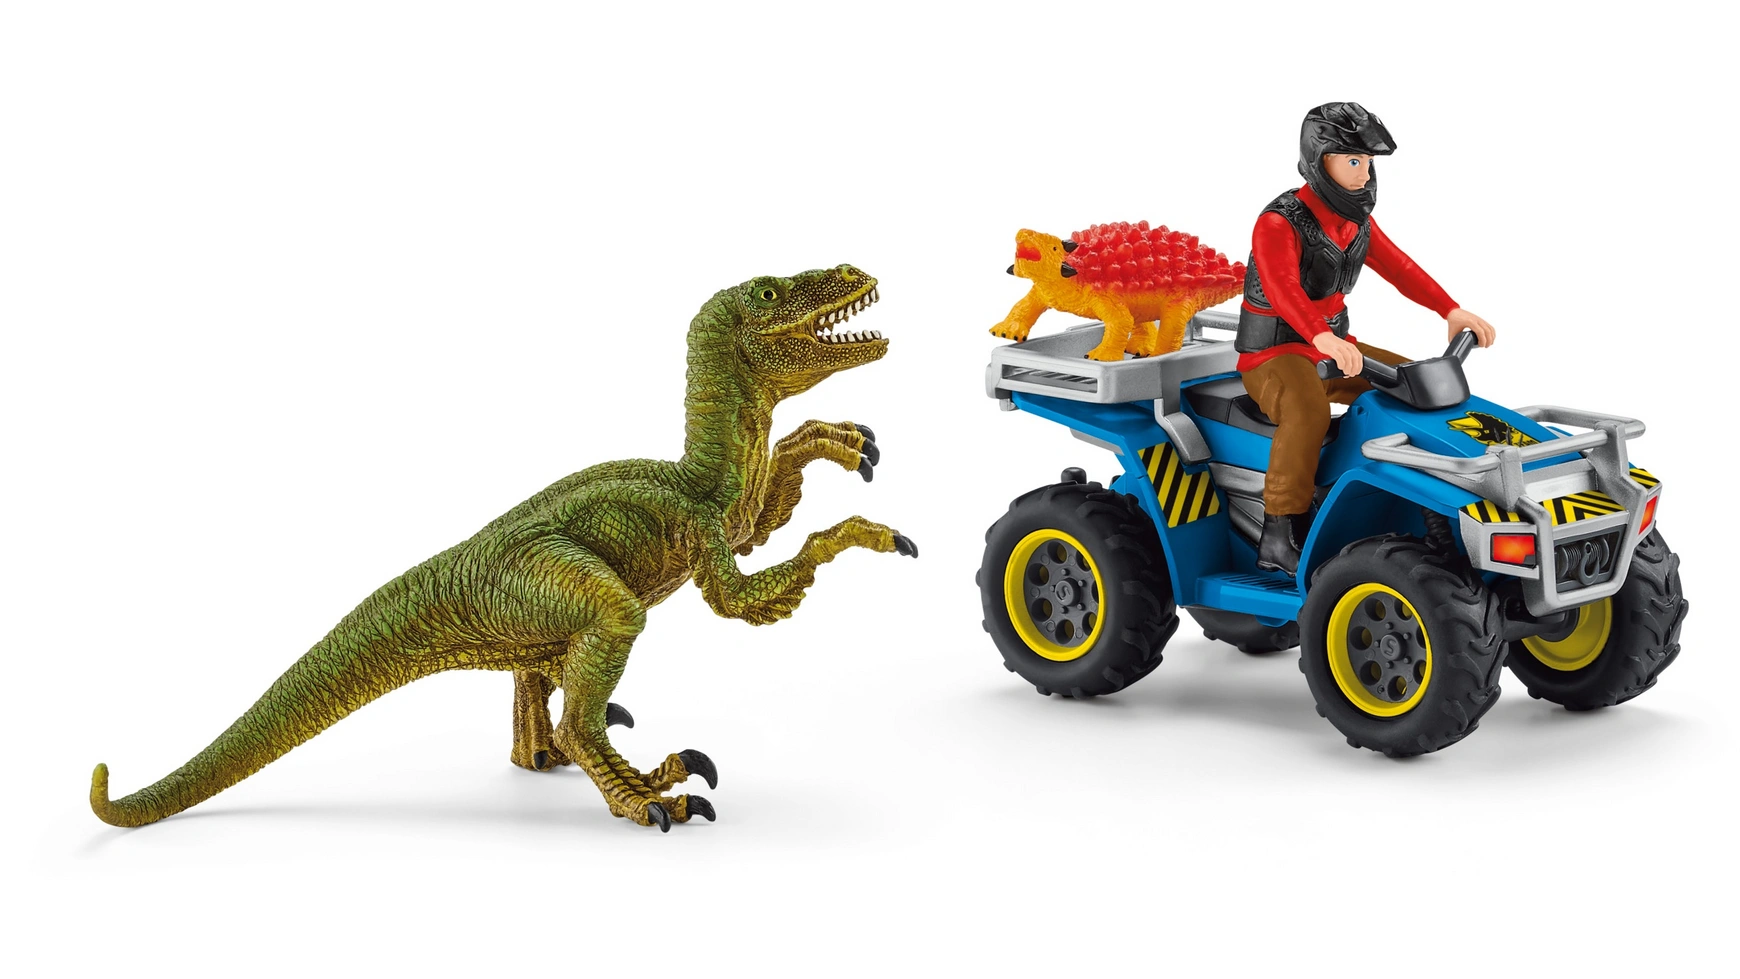 Schleich Динозавр Побег от велоцираптора на квадроцикле фигурки schleich t rex и velociraptor набор